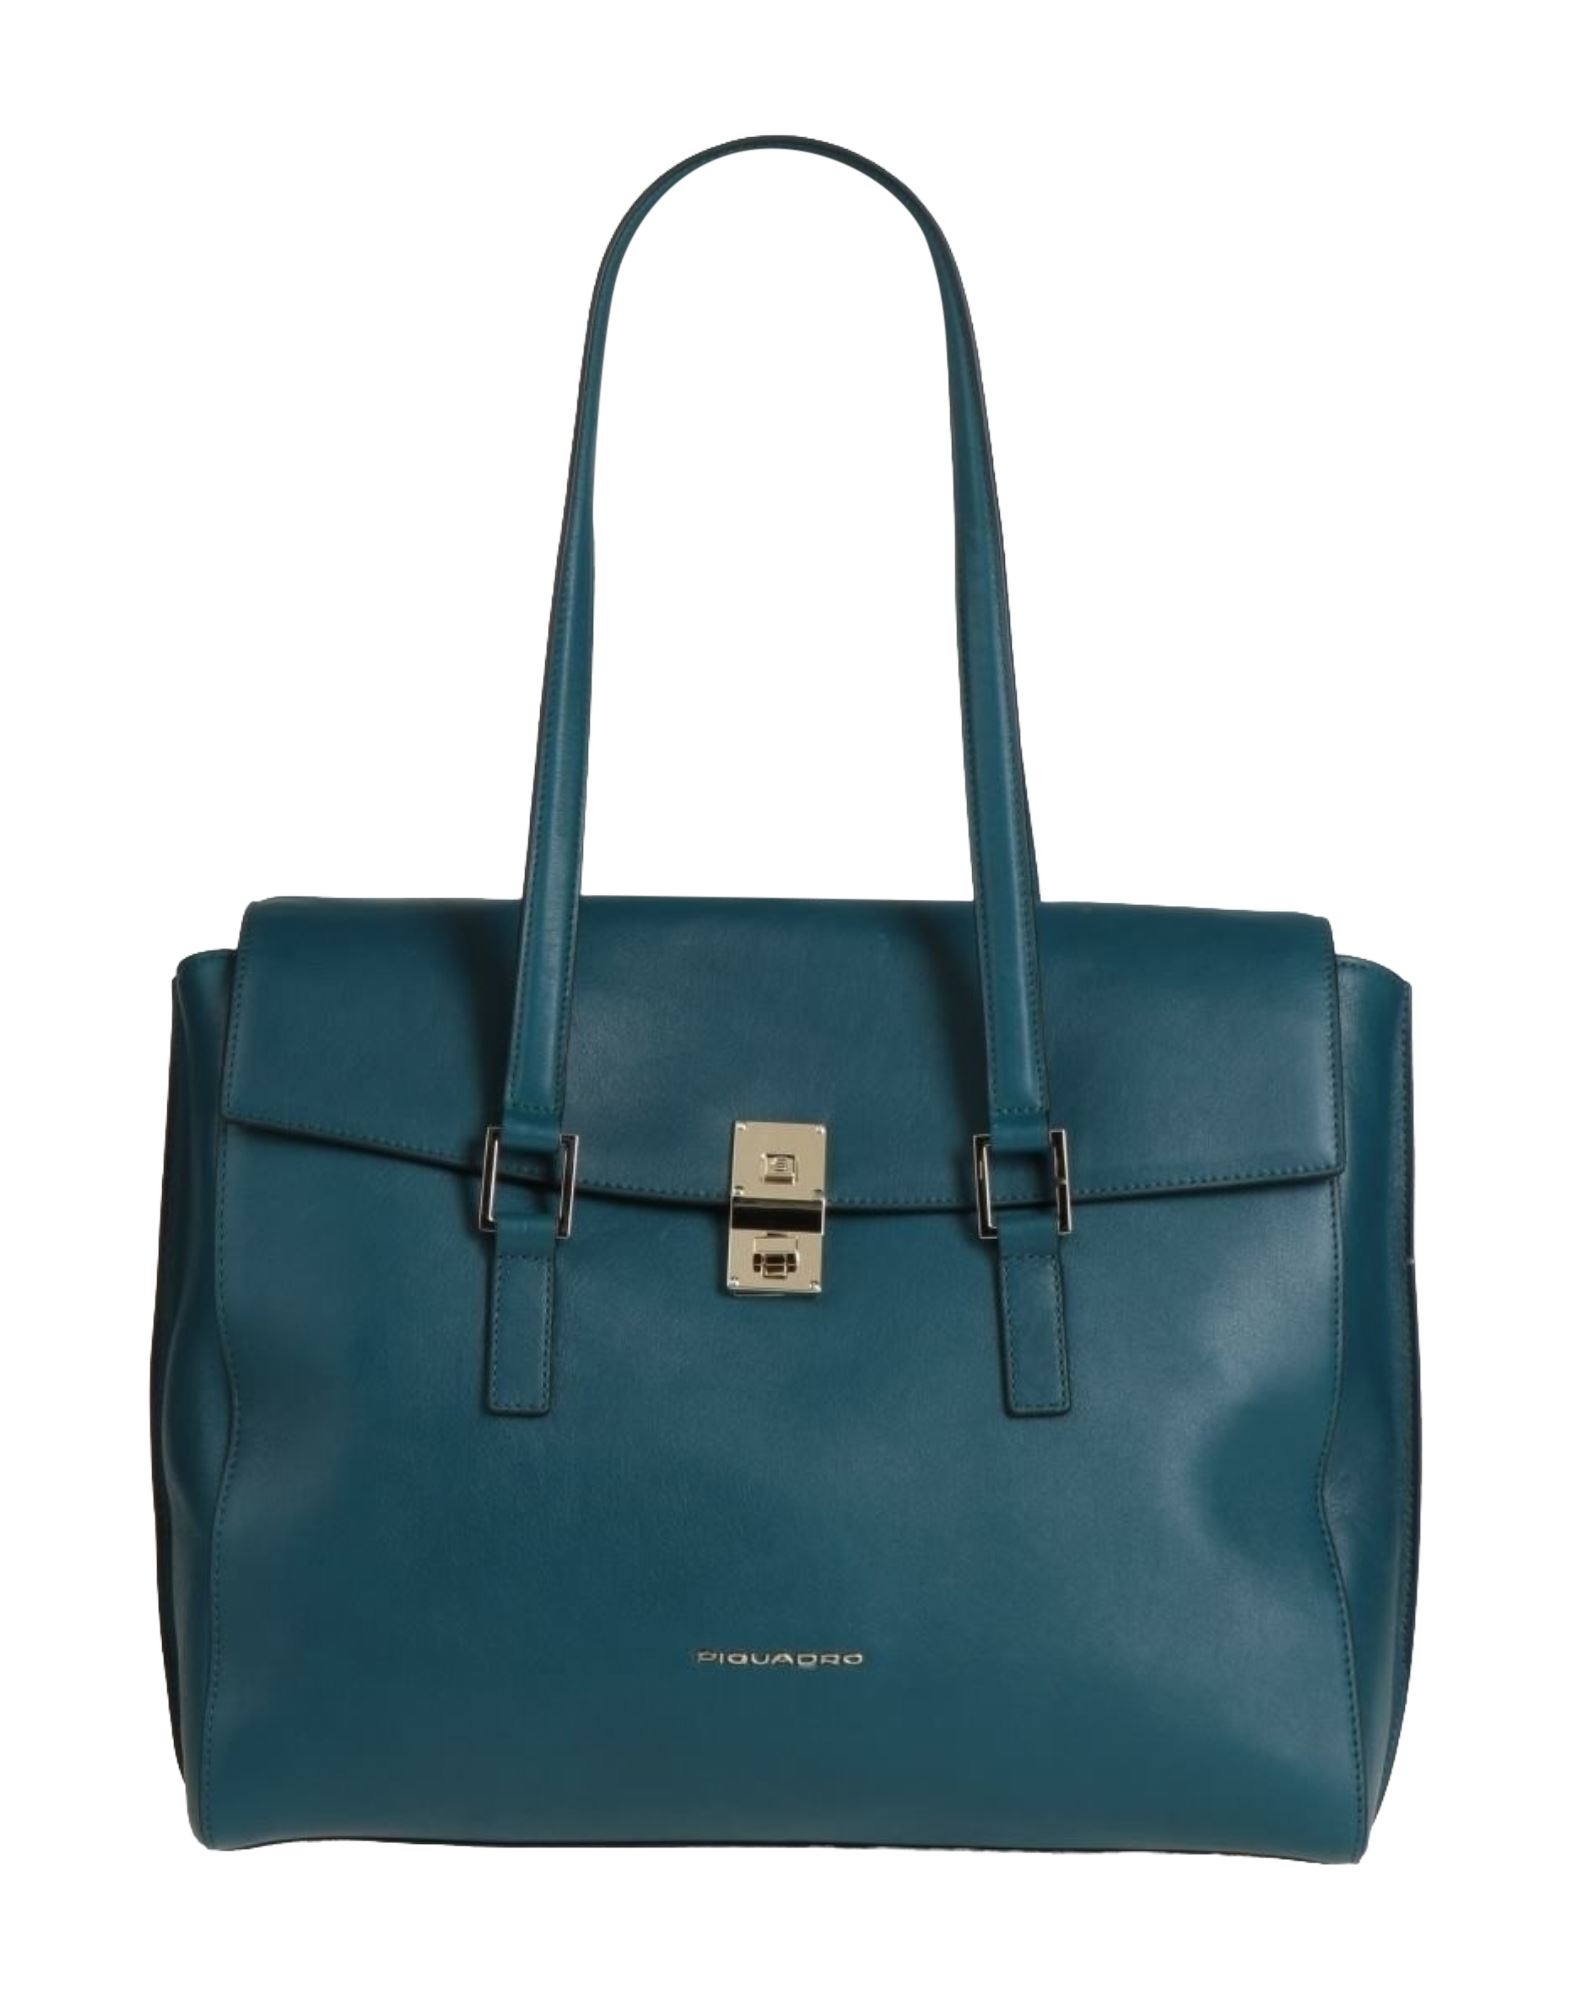 Piquadro Handbags In Deep Jade